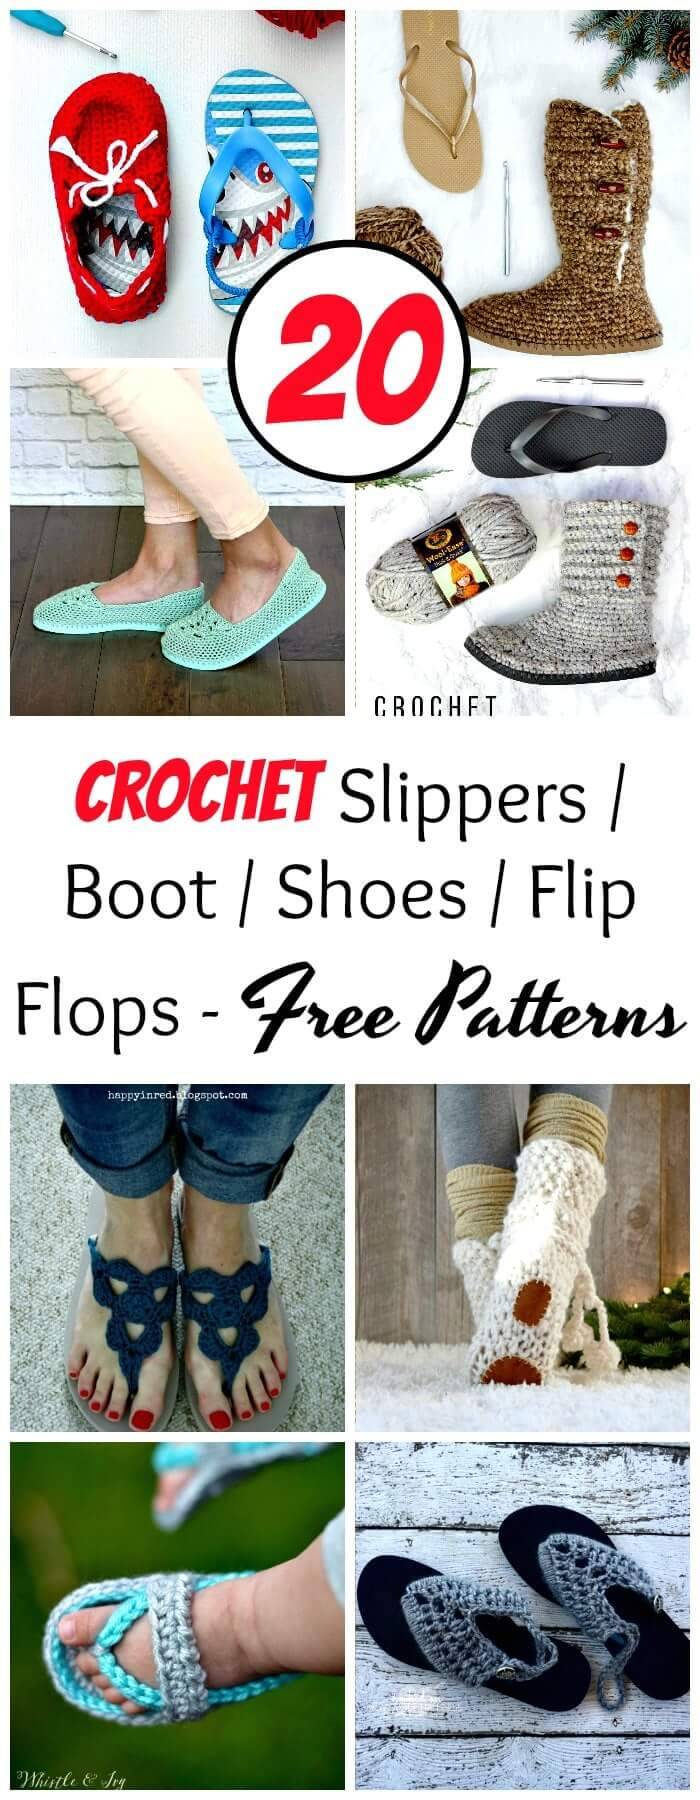 Crochet Slippers - Boot - Shoes - Flip Flops - Free Crochet Patterns